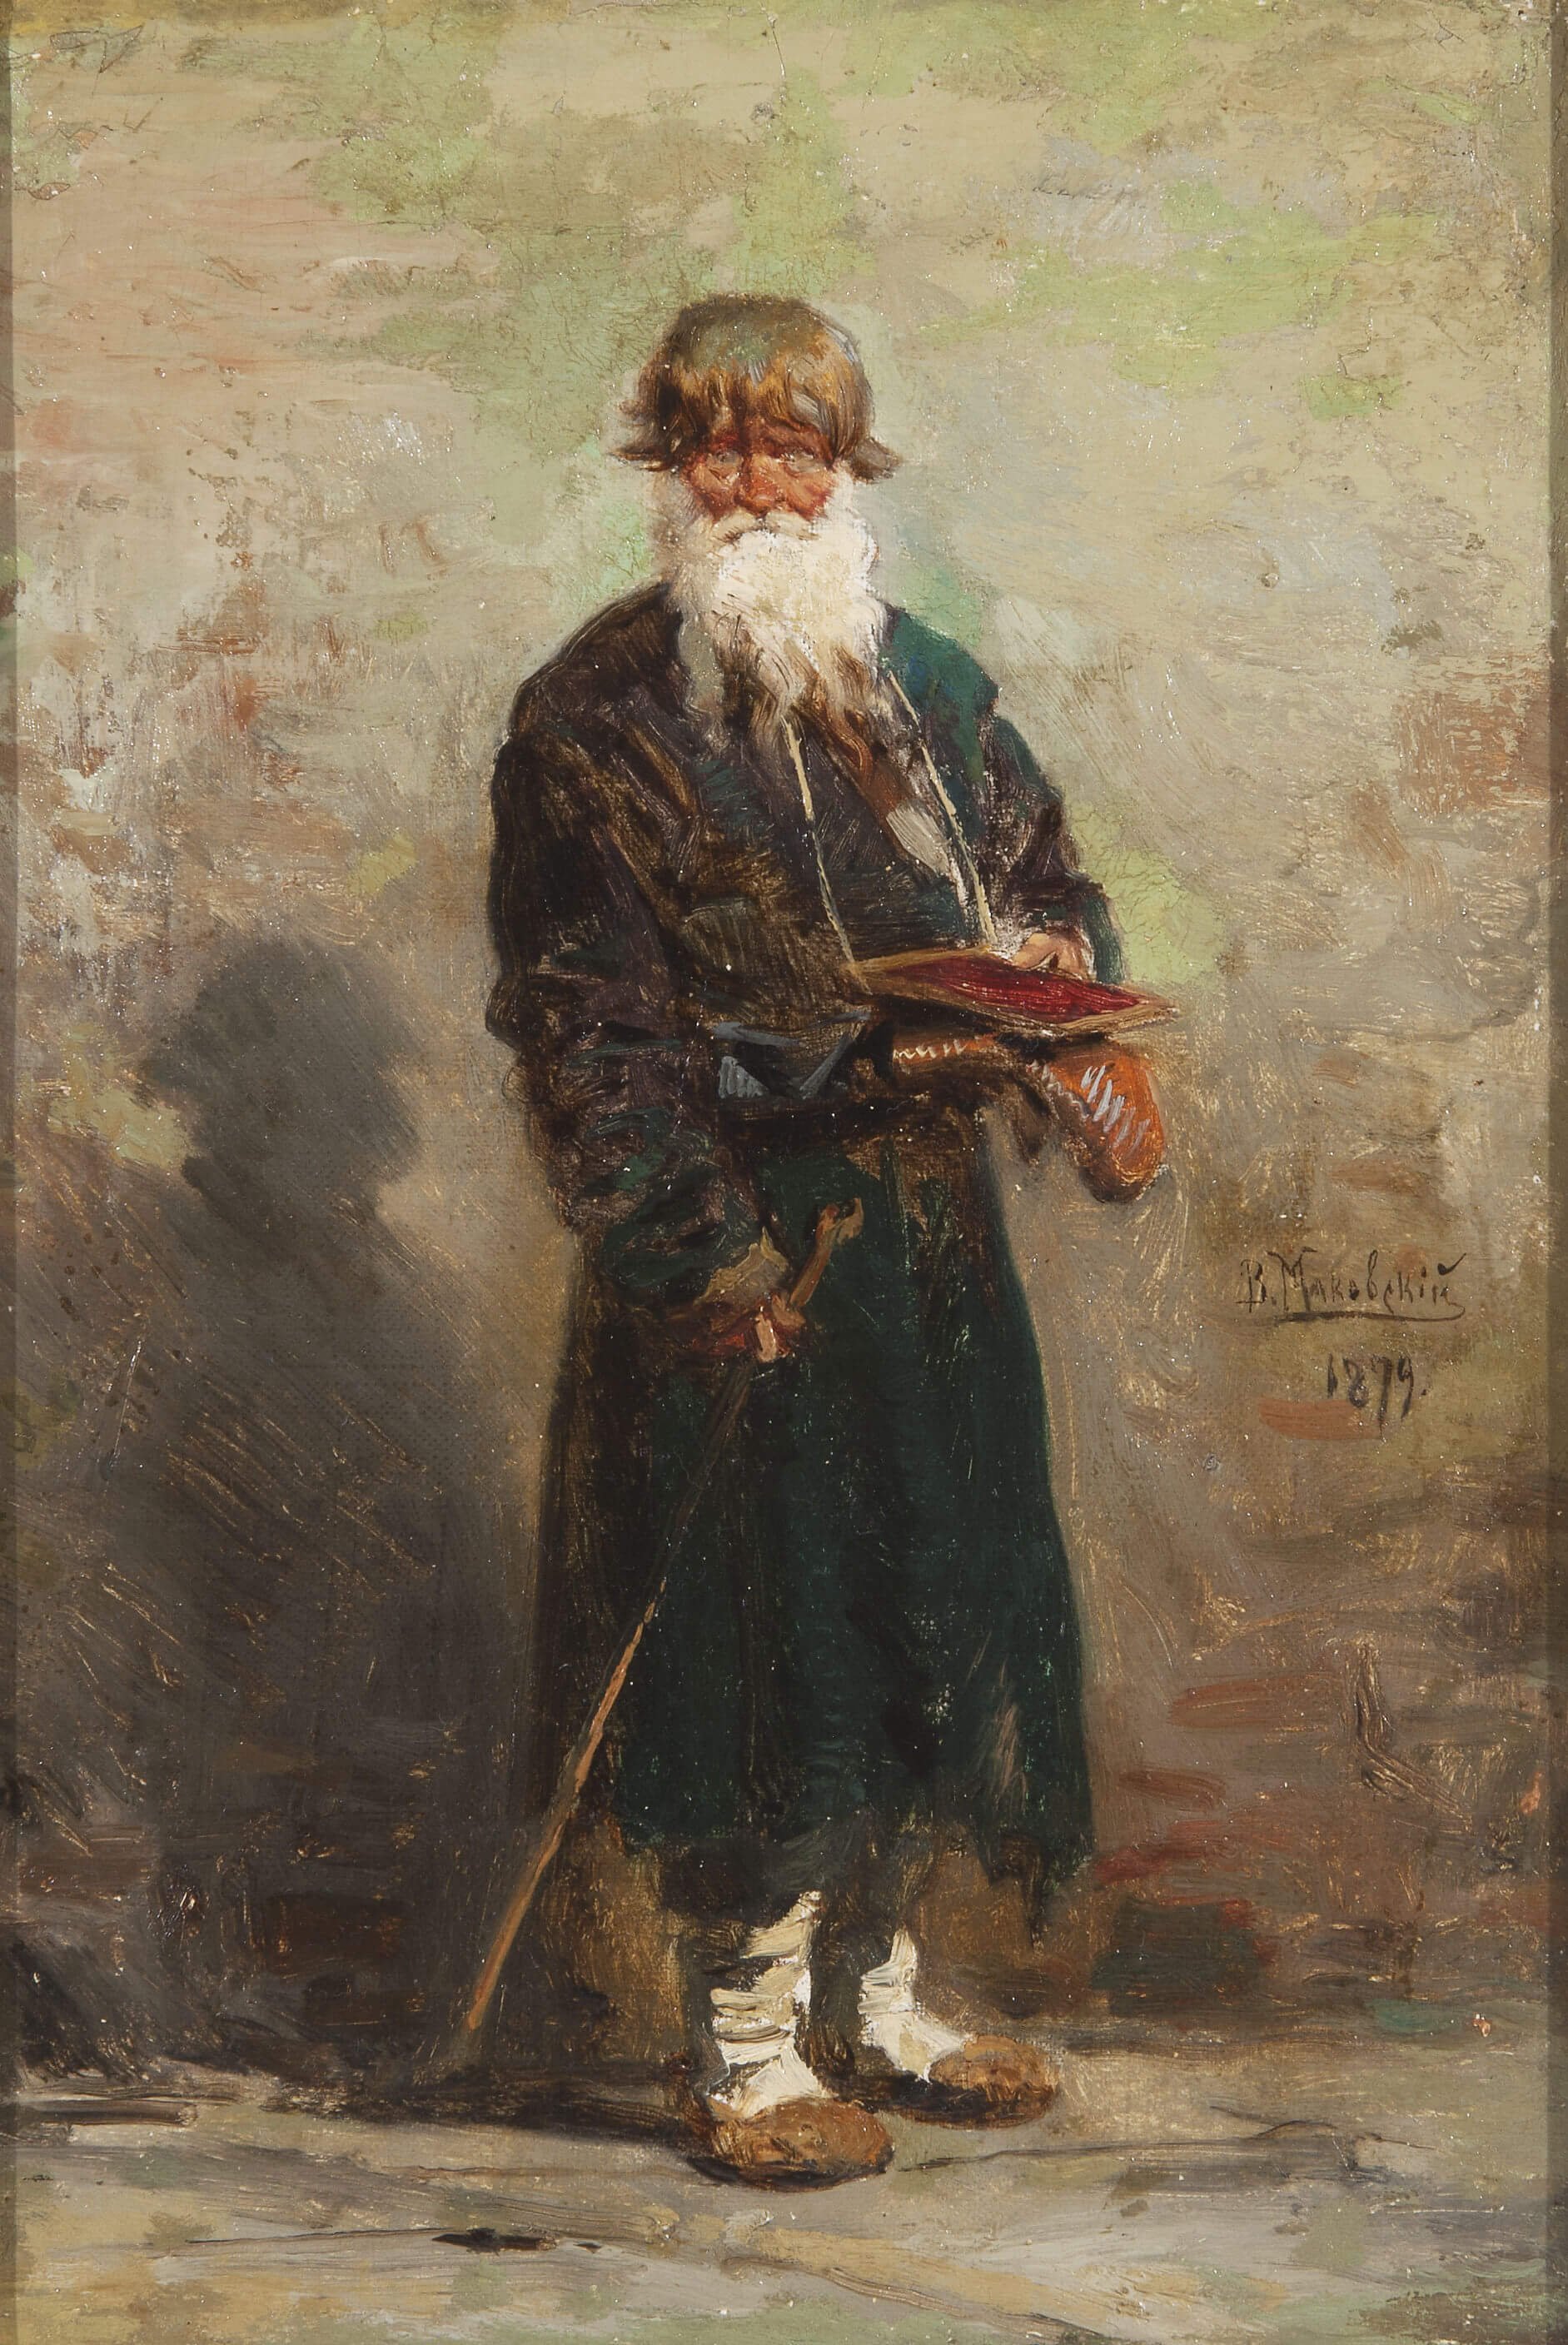 Makovsky Vladimir, The Peasant, 1879, oil on canvas, 30.1 x 20.7 cm. (11.85 x 8.15 in.).jpg